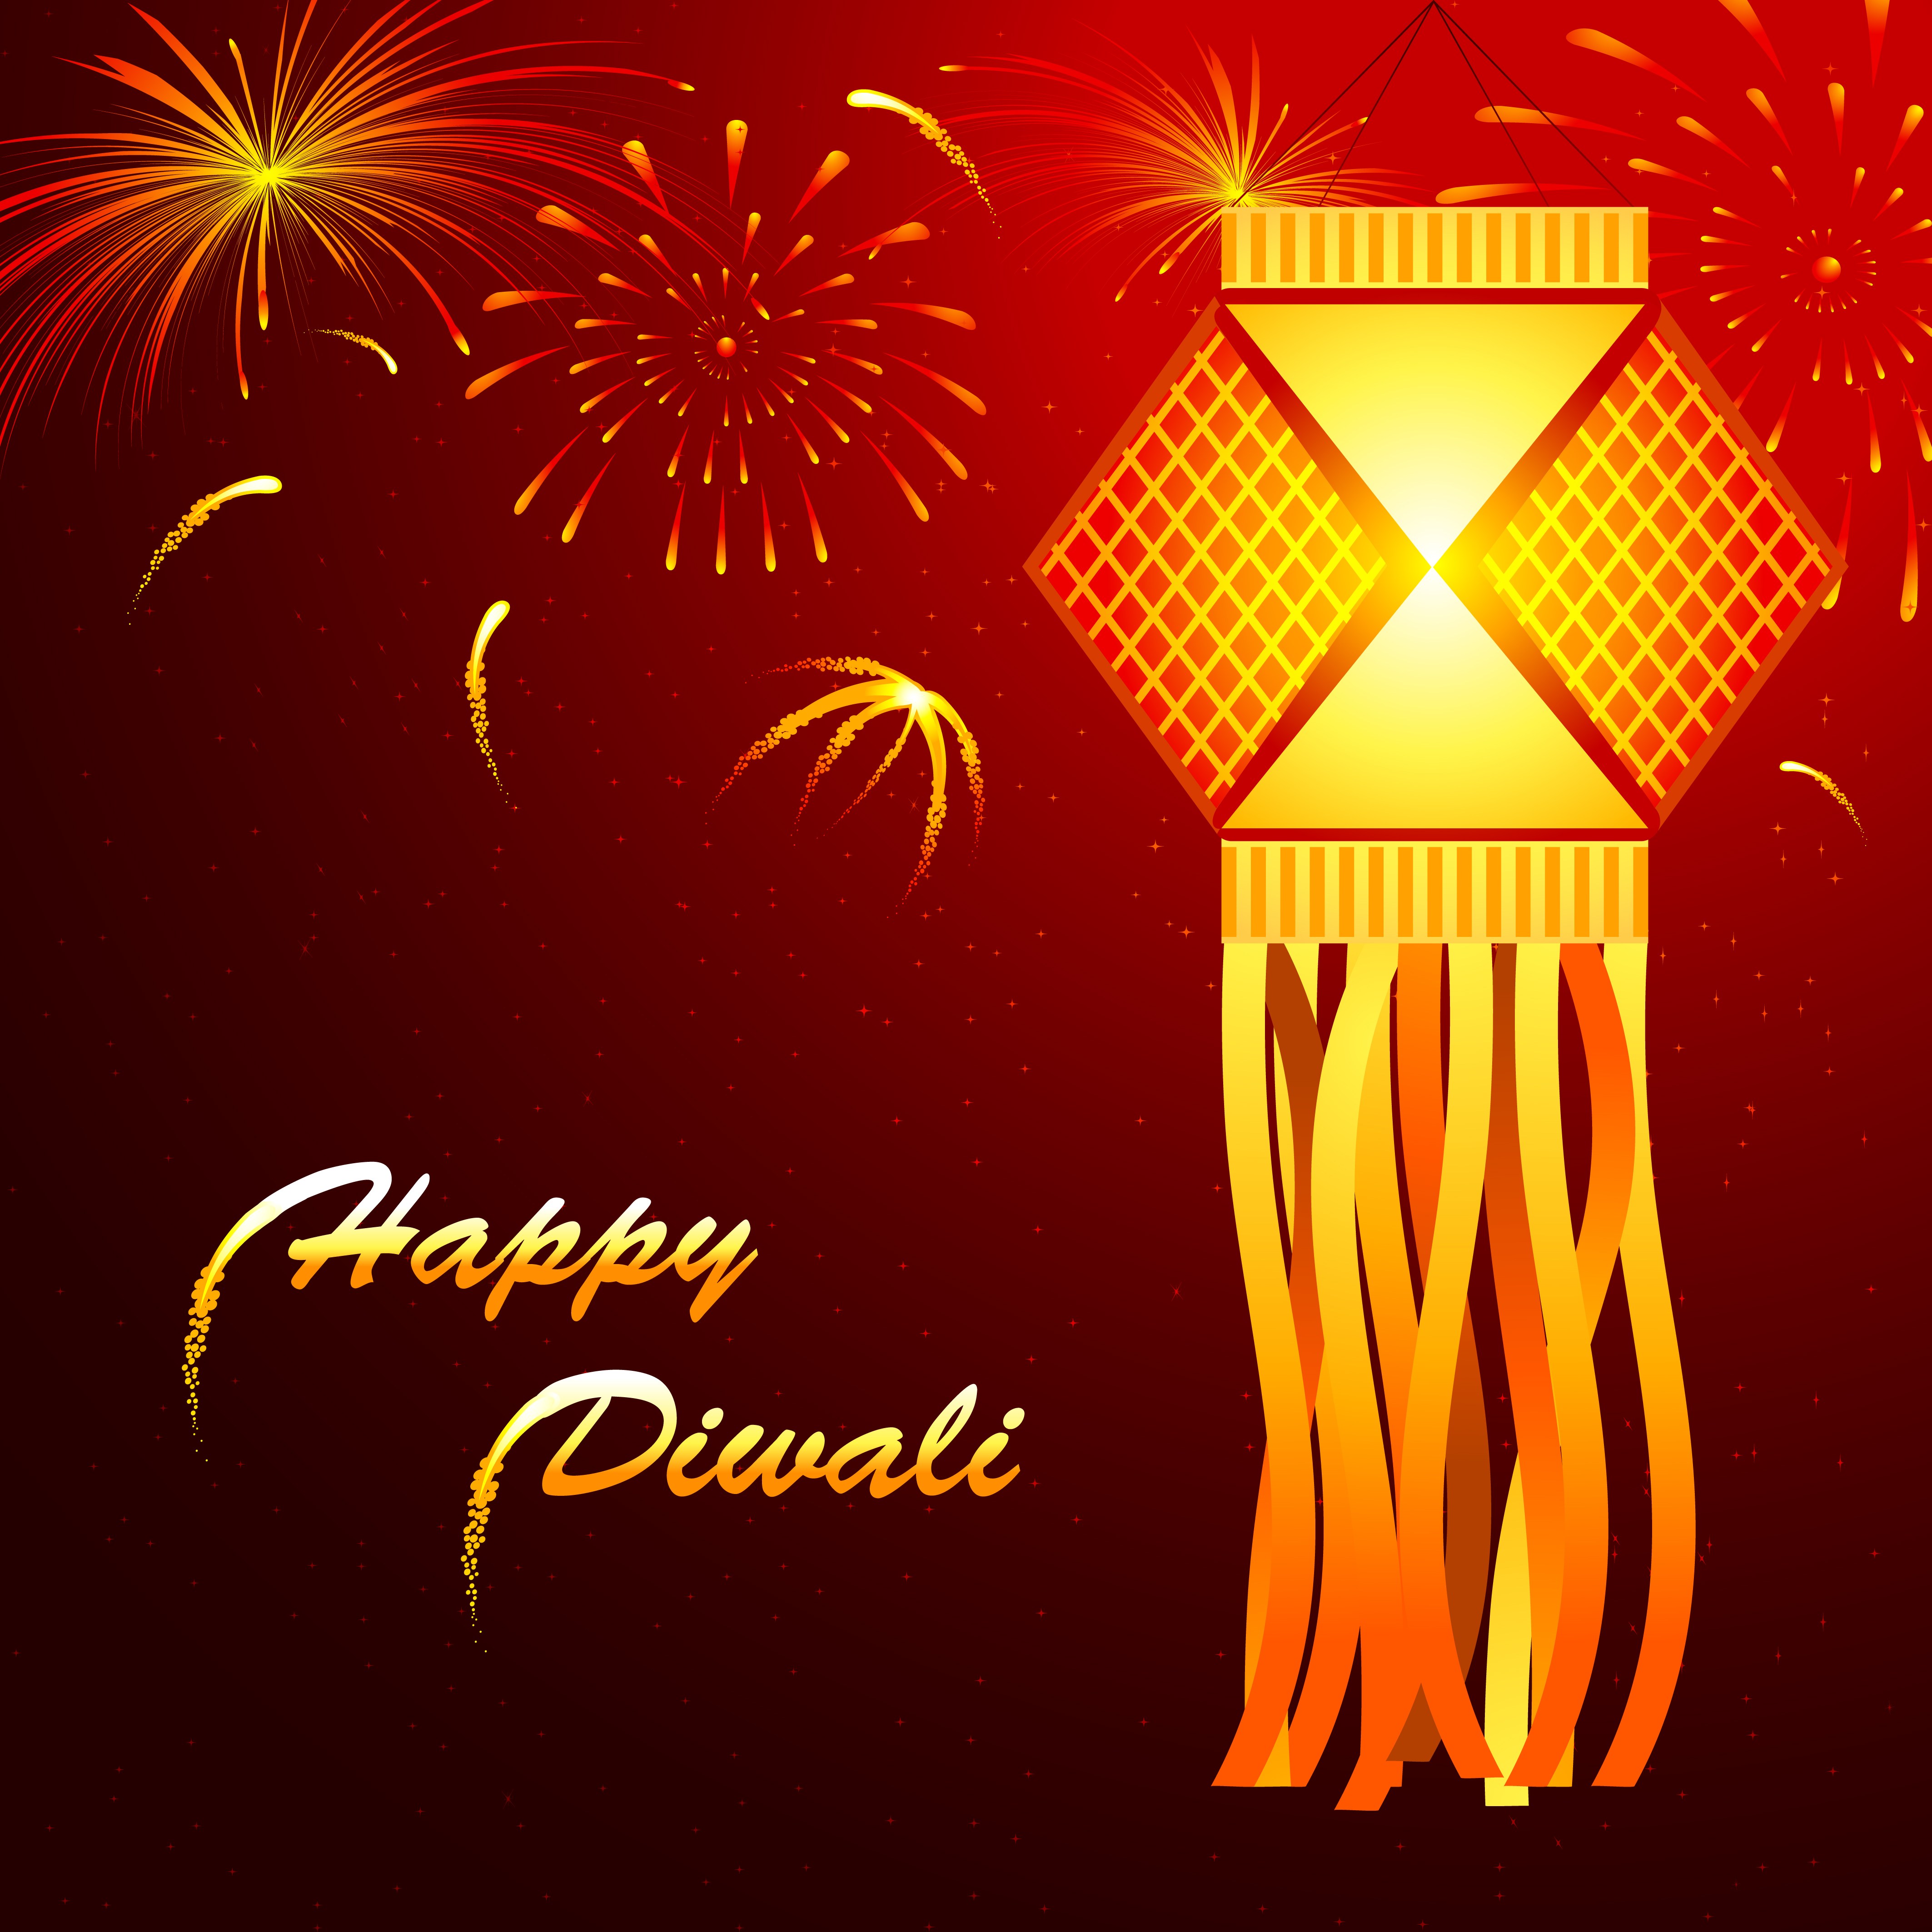 Diwali Images Diwali Images Photos - Whatsapp Dp On Diwali , HD Wallpaper & Backgrounds